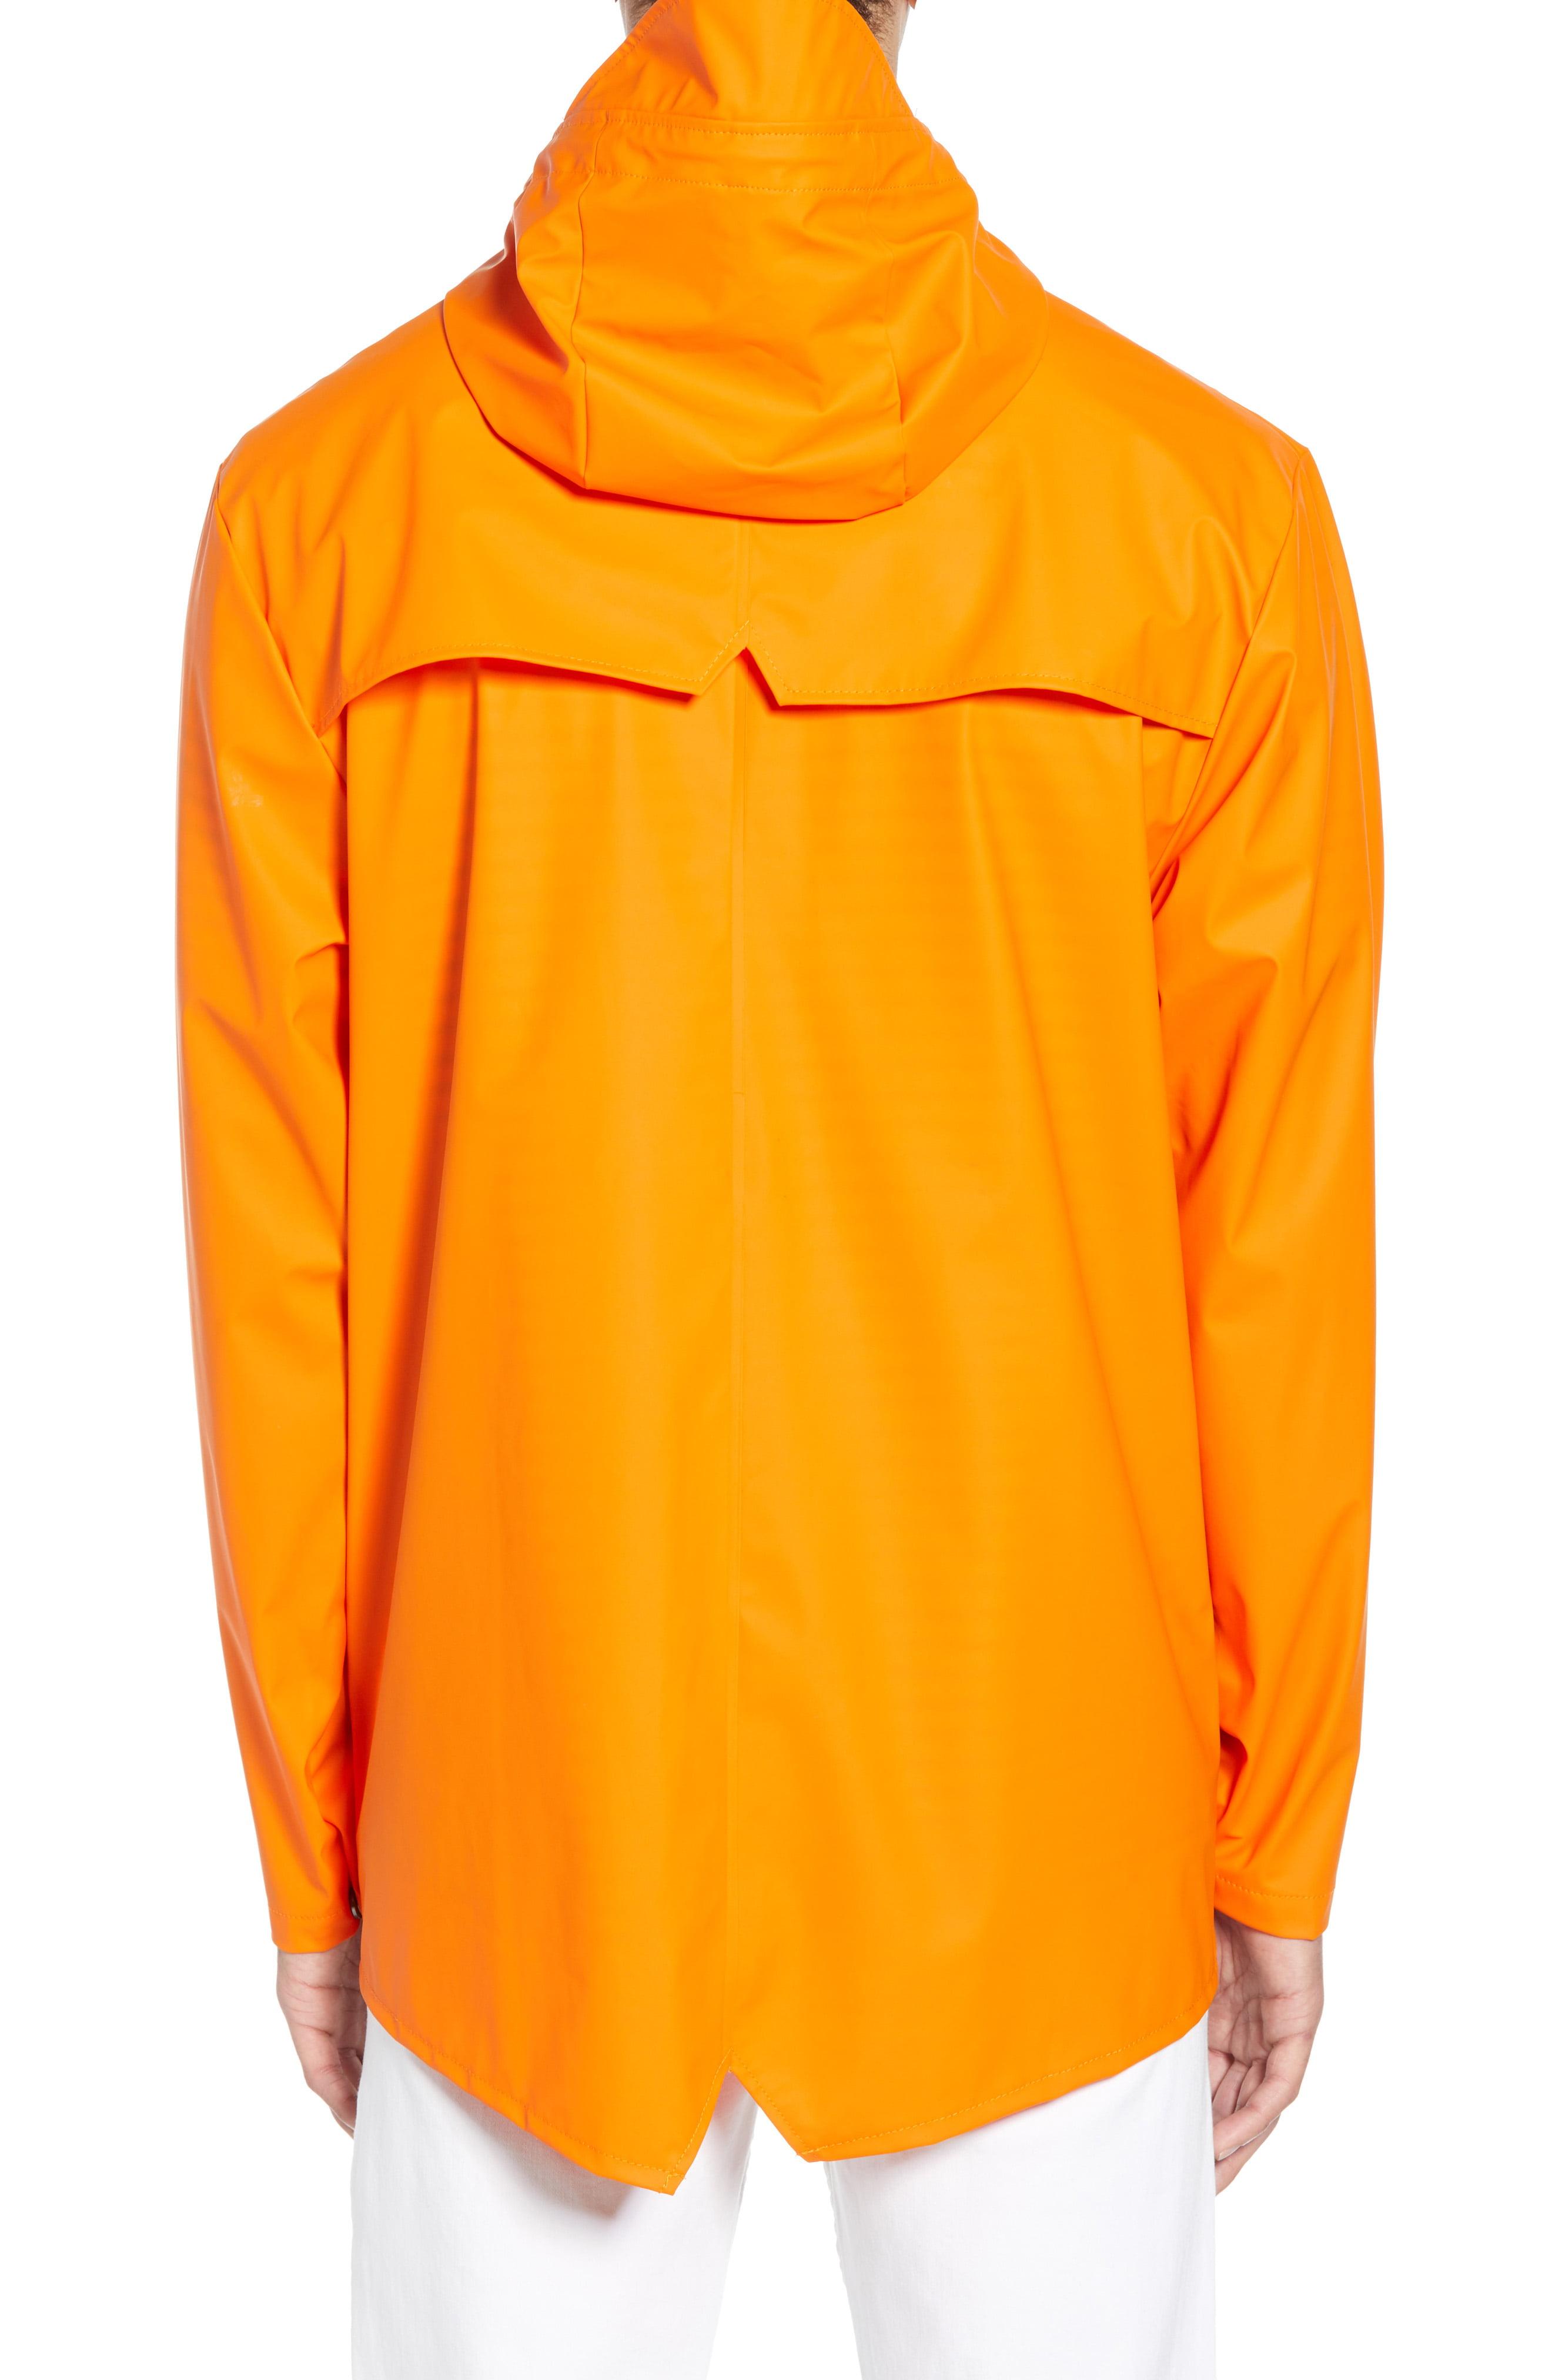 Rains Lightweight Hooded Rain Jacket in Orange for Men - Lyst